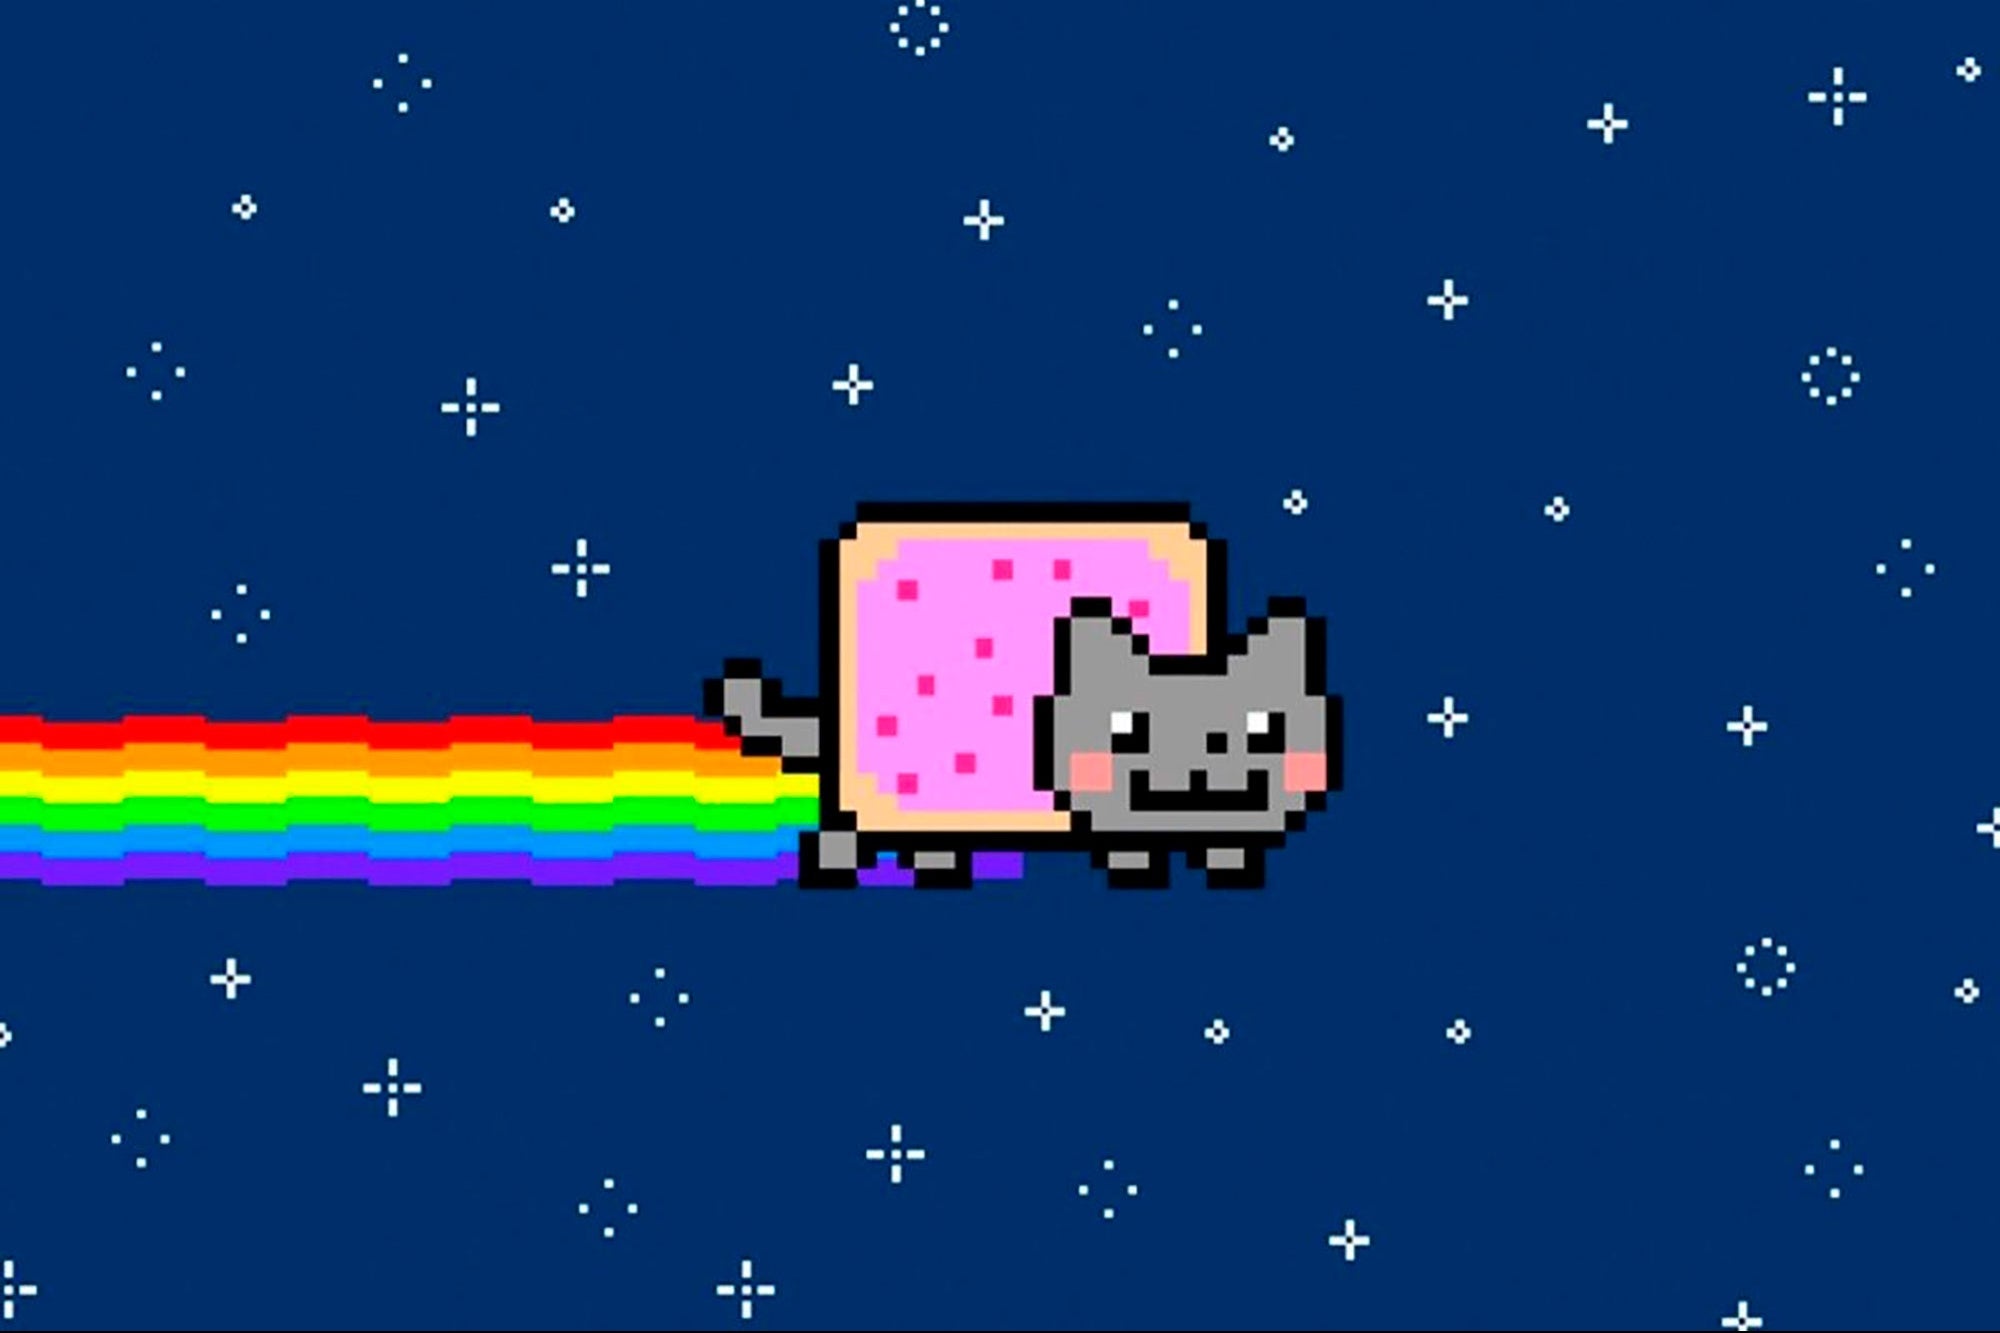 Digital art of a cat riding a rainbow.